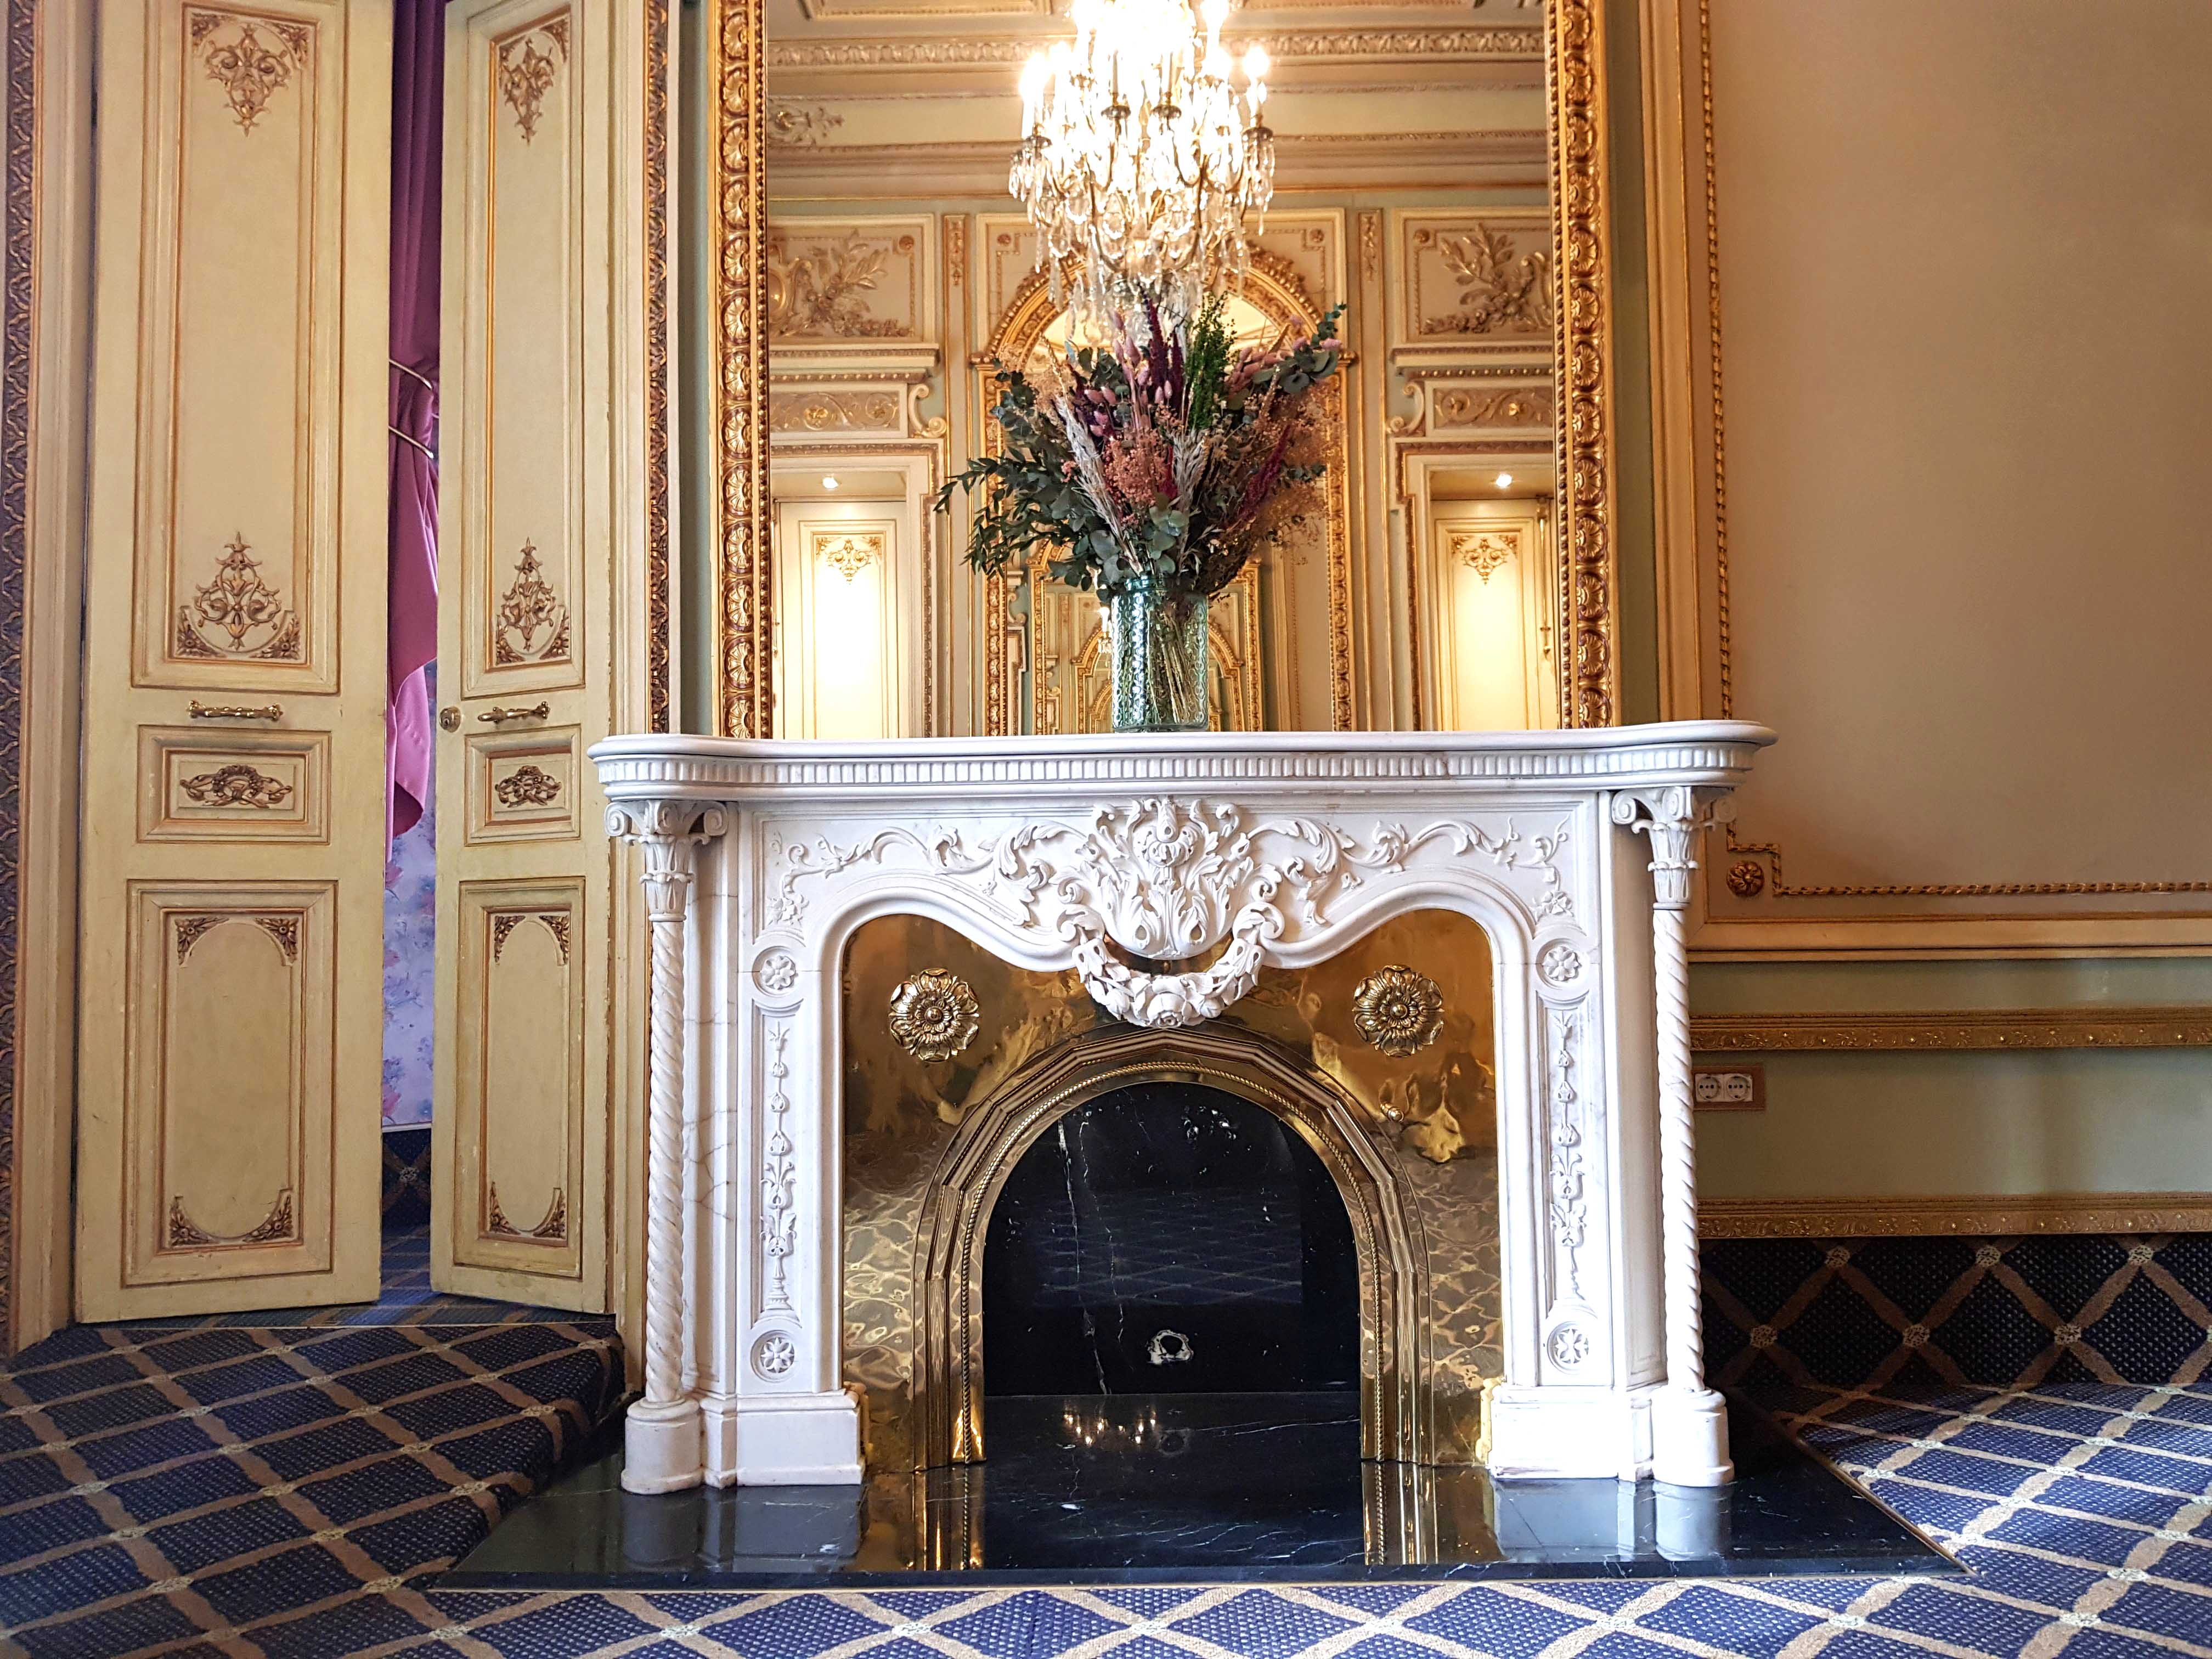 Suite Versailles Fireplace